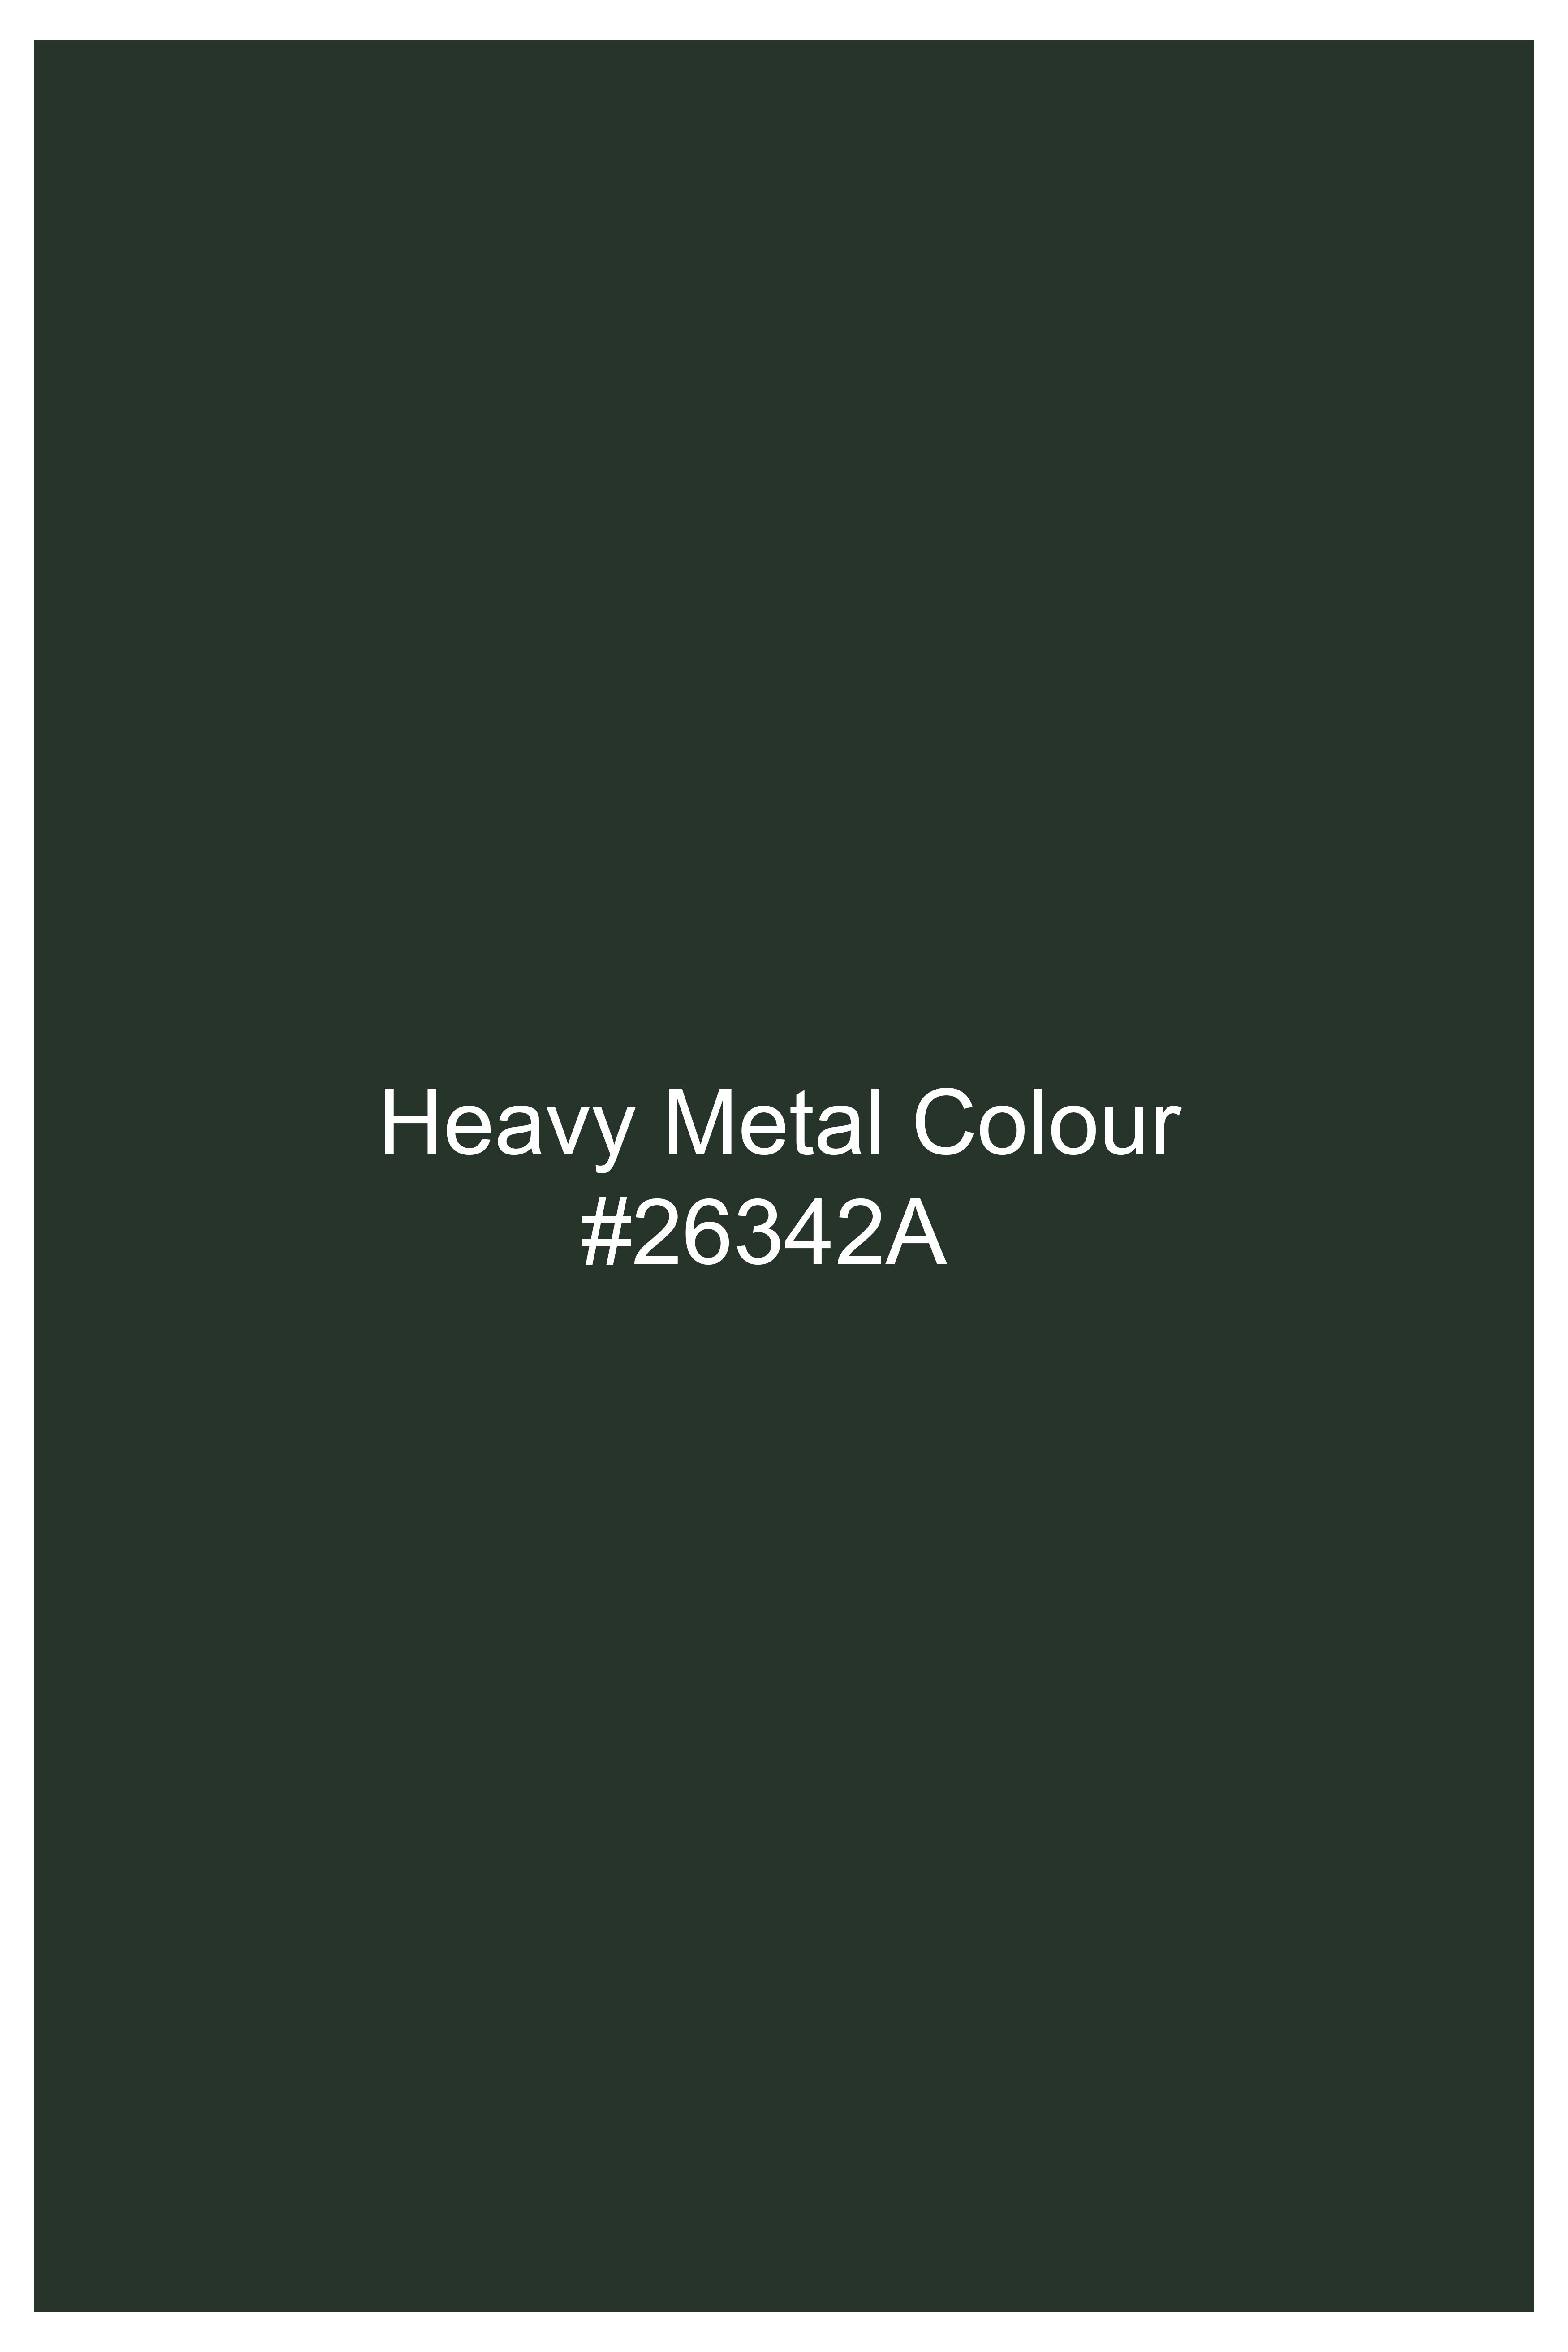 Heavy Metal Green Premium Cotton Cross Buttoned Bandhgala Stretchable Traveler Blazer BL2777-CBG-36, BL2777-CBG-38, BL2777-CBG-40, BL2777-CBG-42, BL2777-CBG-44, BL2777-CBG-46, BL2777-CBG-48, BL2777-CBG-50, BL2777-CBG-52, BL2777-CBG-54, BL2777-CBG-56, BL2777-CBG-58, BL2777-CBG-60